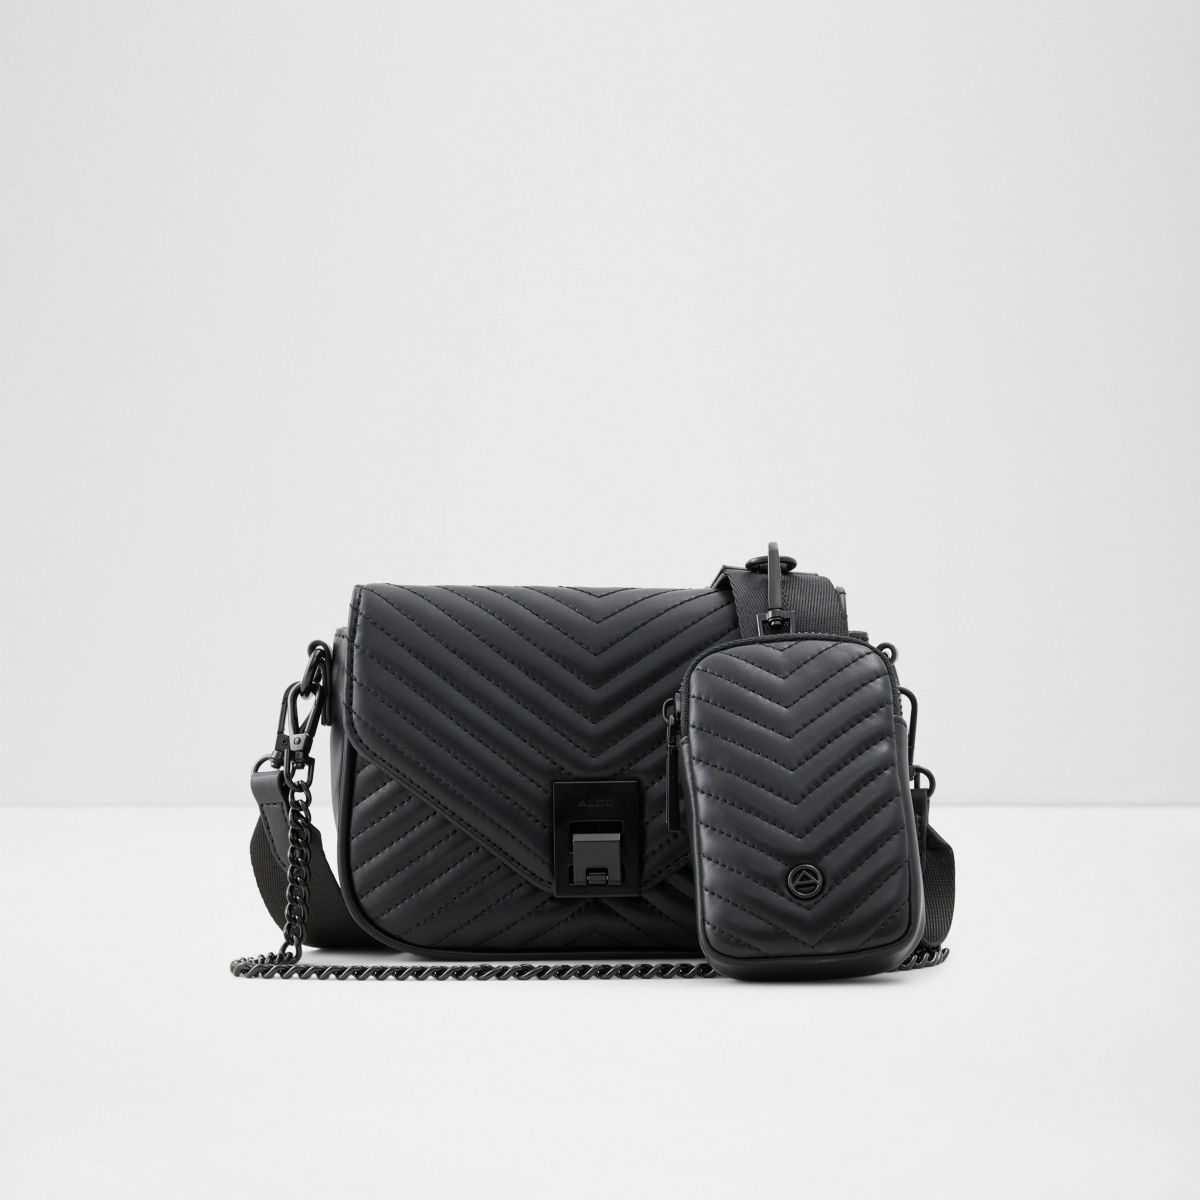 ALDO Black PU Structured Sling Bag (Onesize) by Myntra